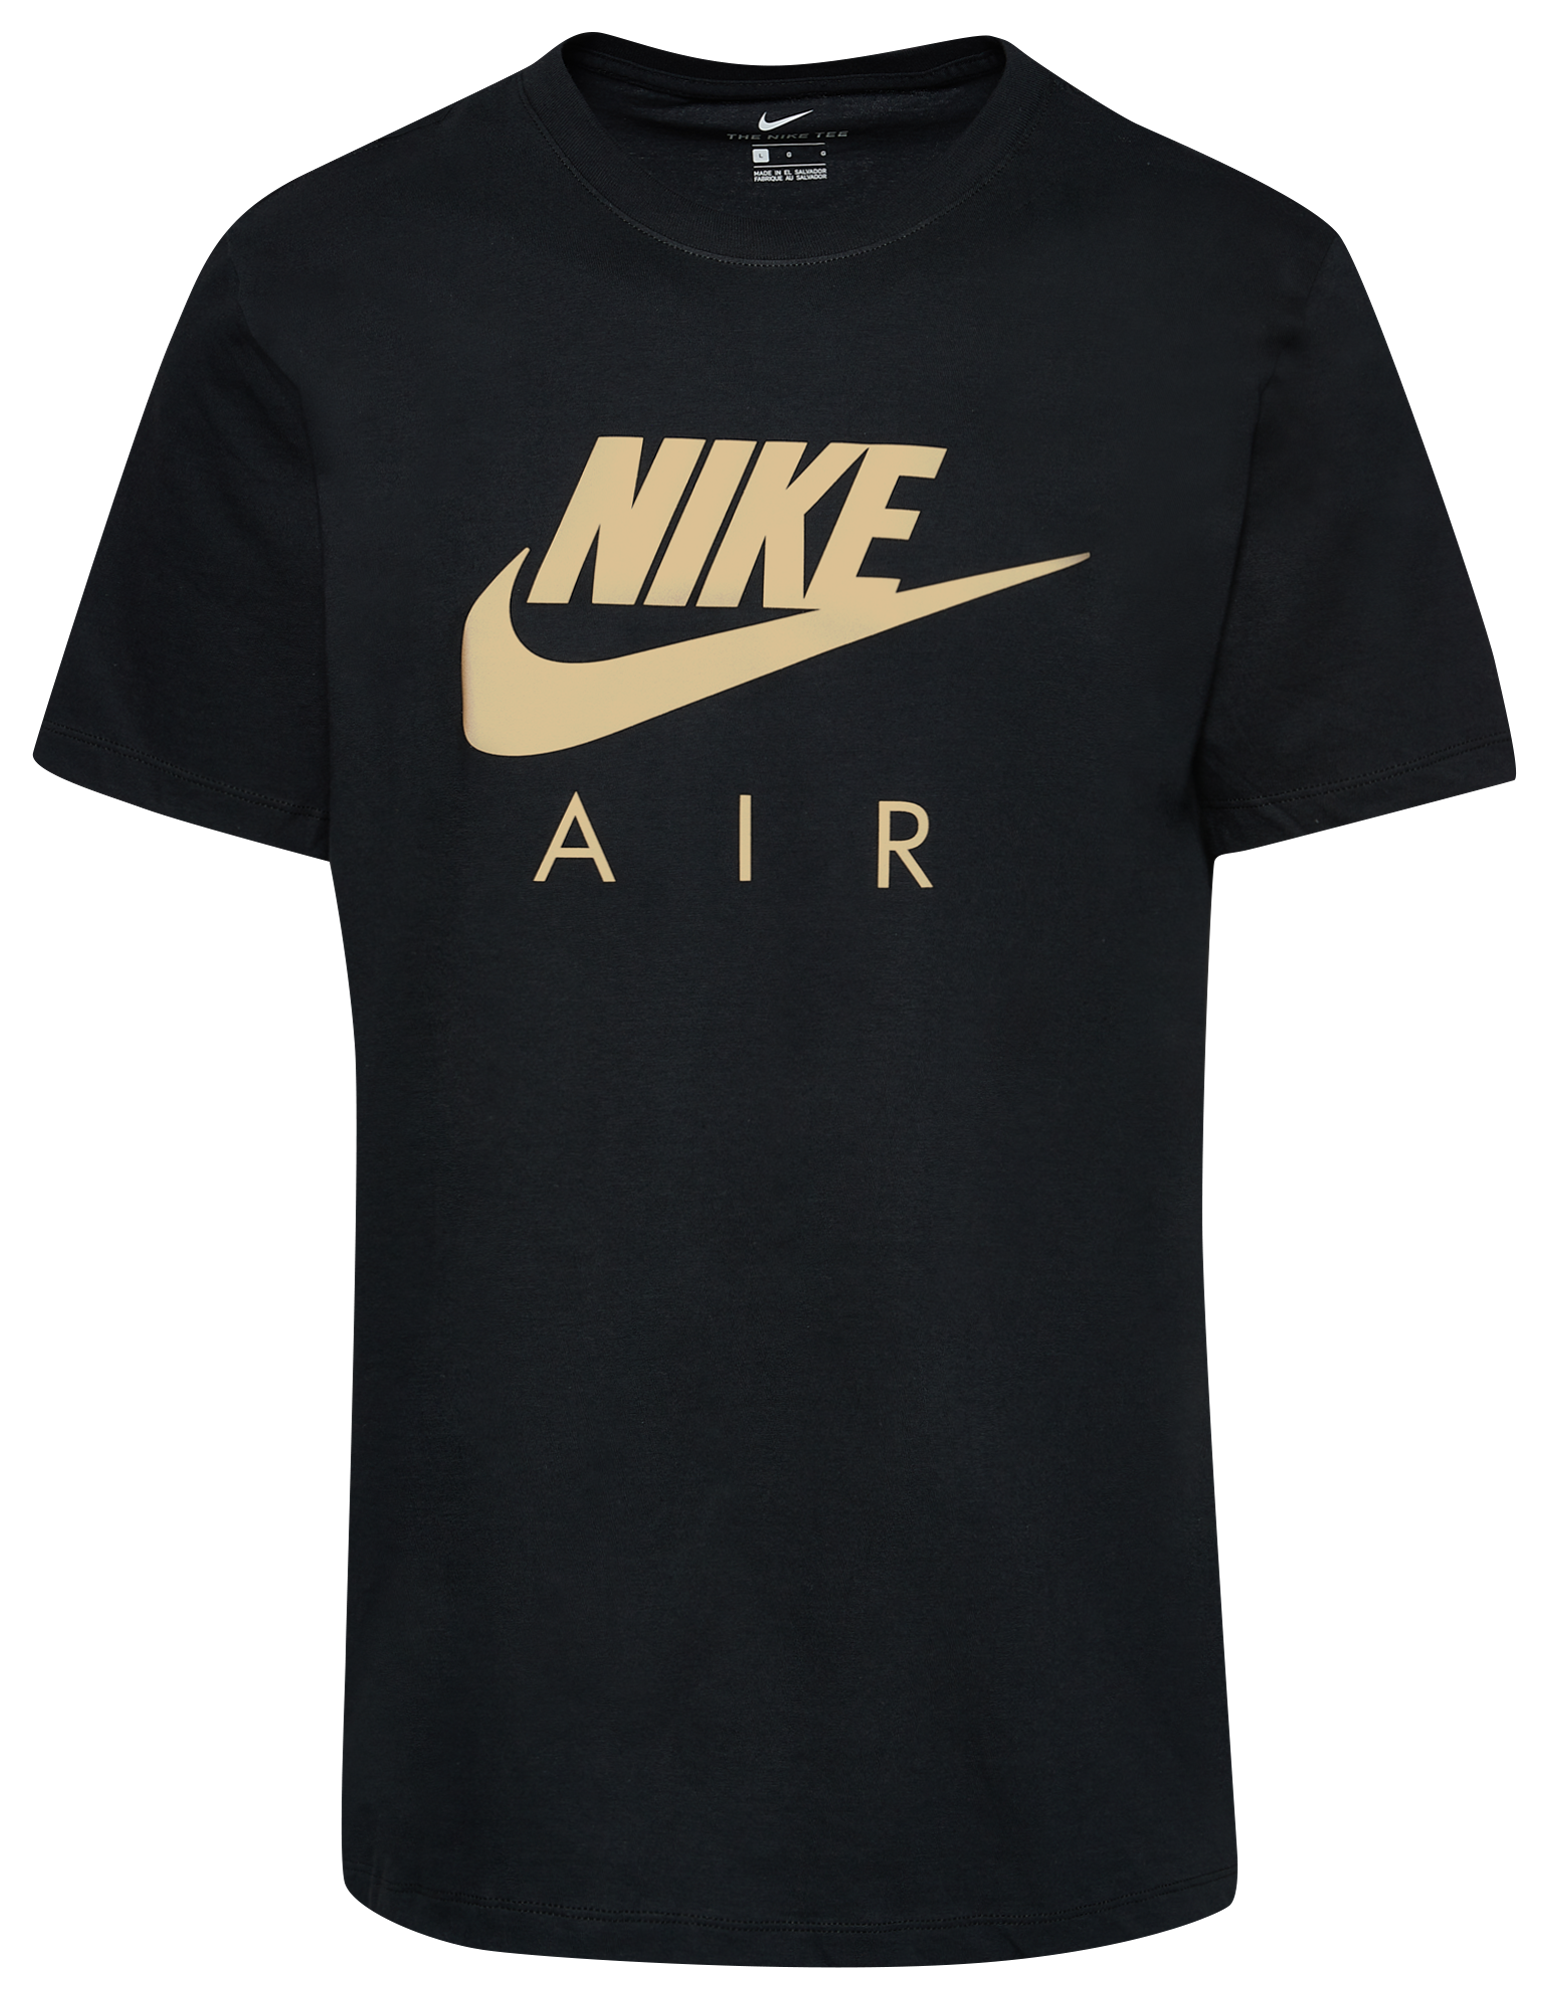 doel Agnes Gray teer Nike Air Reflective T-Shirt | Foot Locker